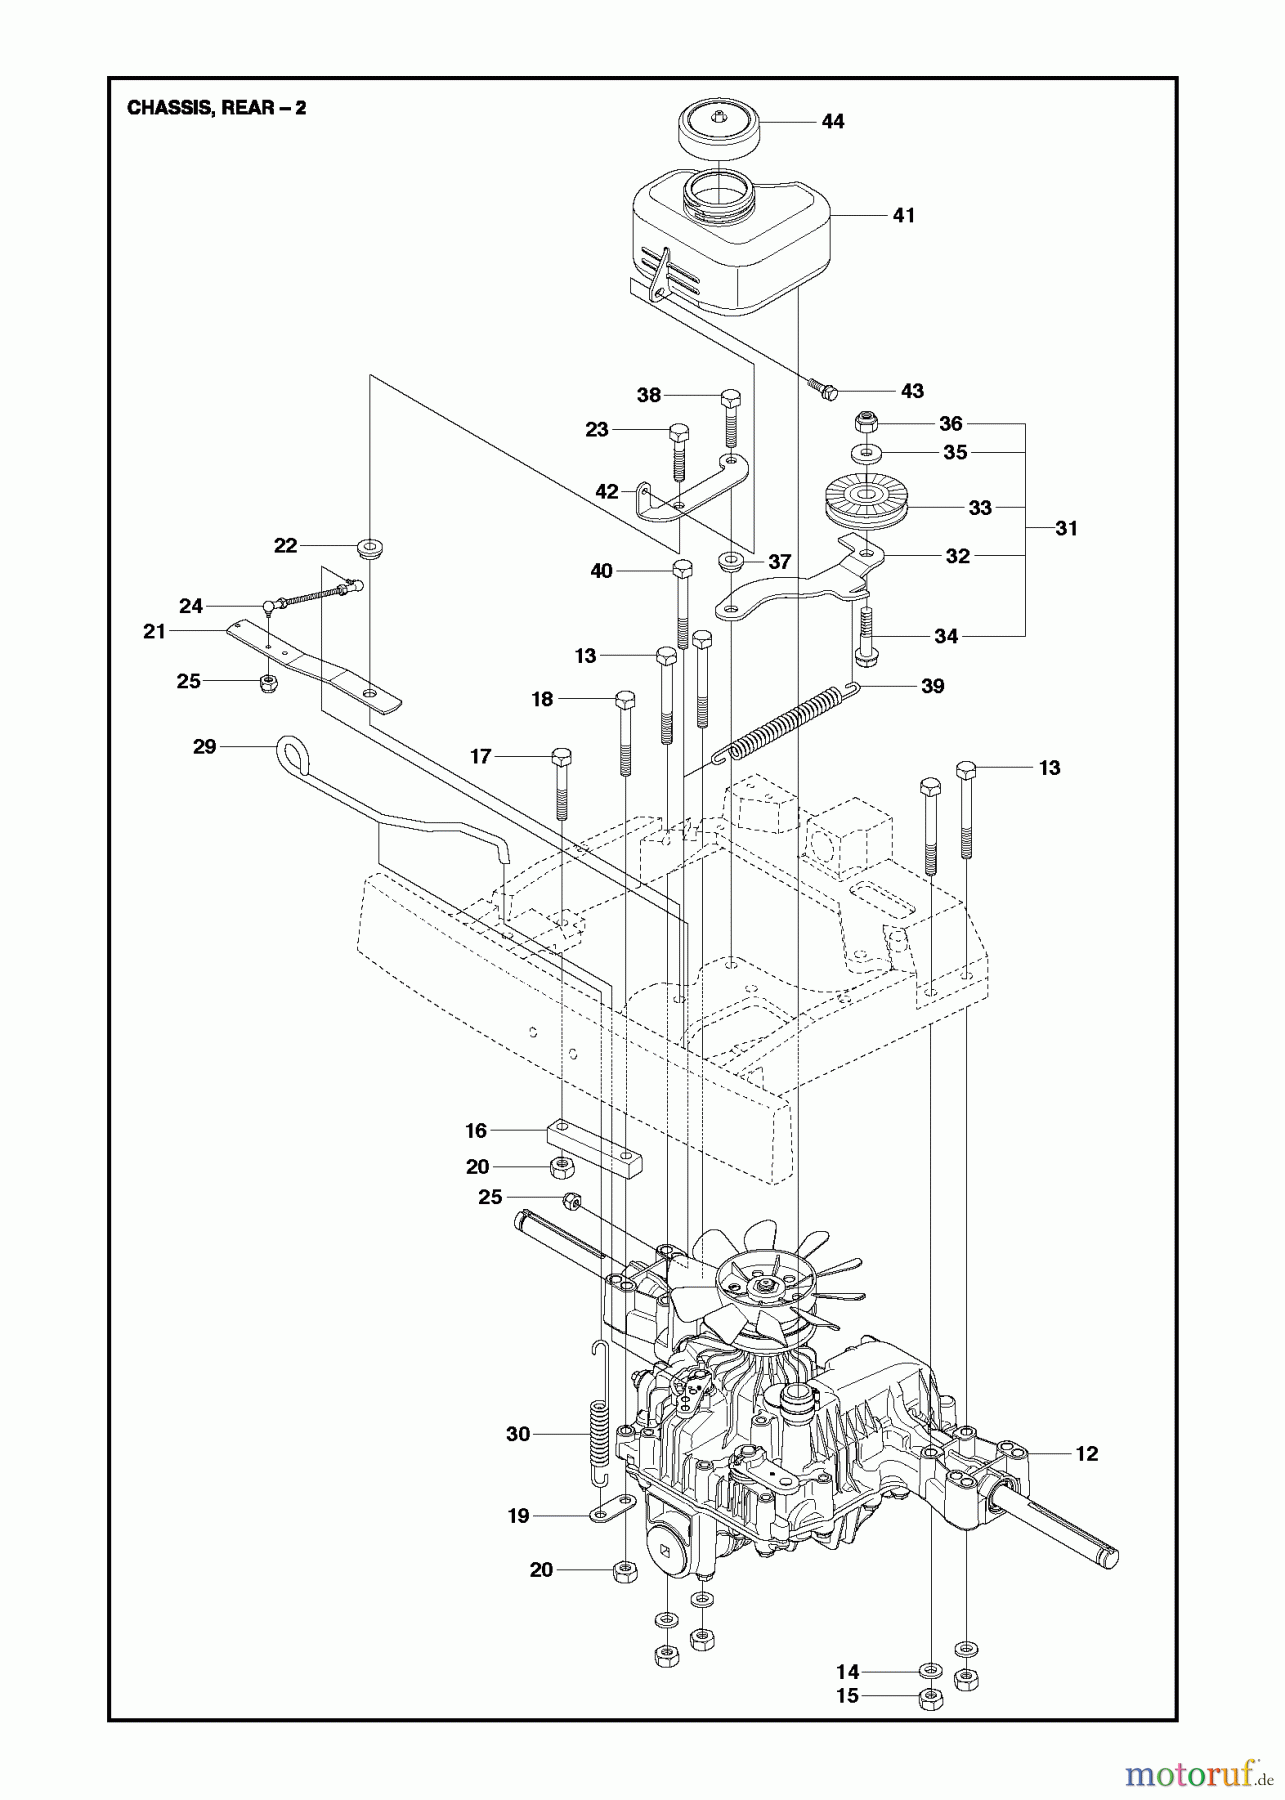  Jonsered Reitermäher FR2218 FA2 4x4 (967179401) - Jonsered Rear-Engine Riding Mower (2013) CHASSIS REAR #1